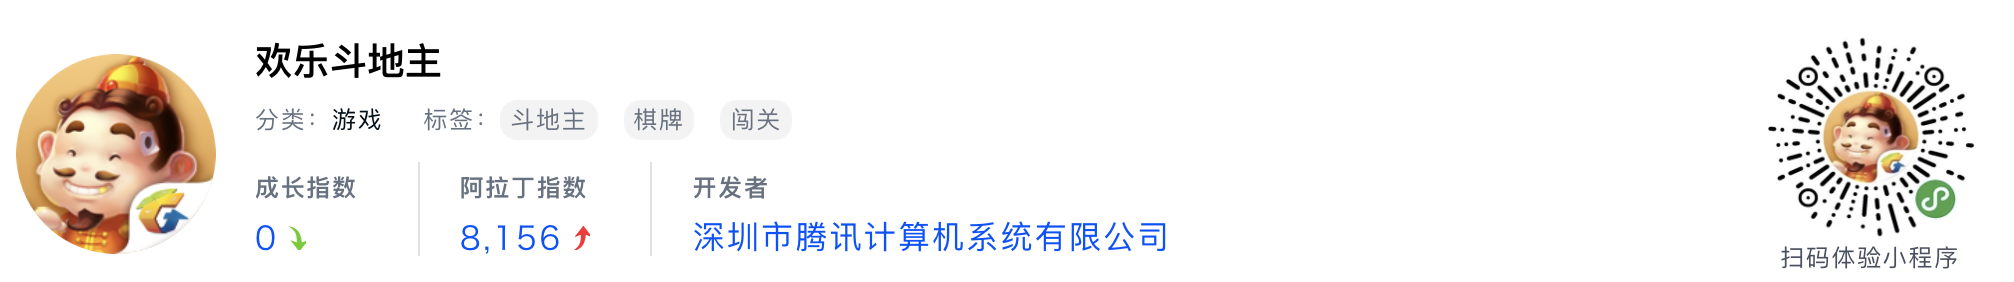 WeChatミニプログラム最新ランキングTOP20【2019年6月版】13位 ：欢乐斗地主